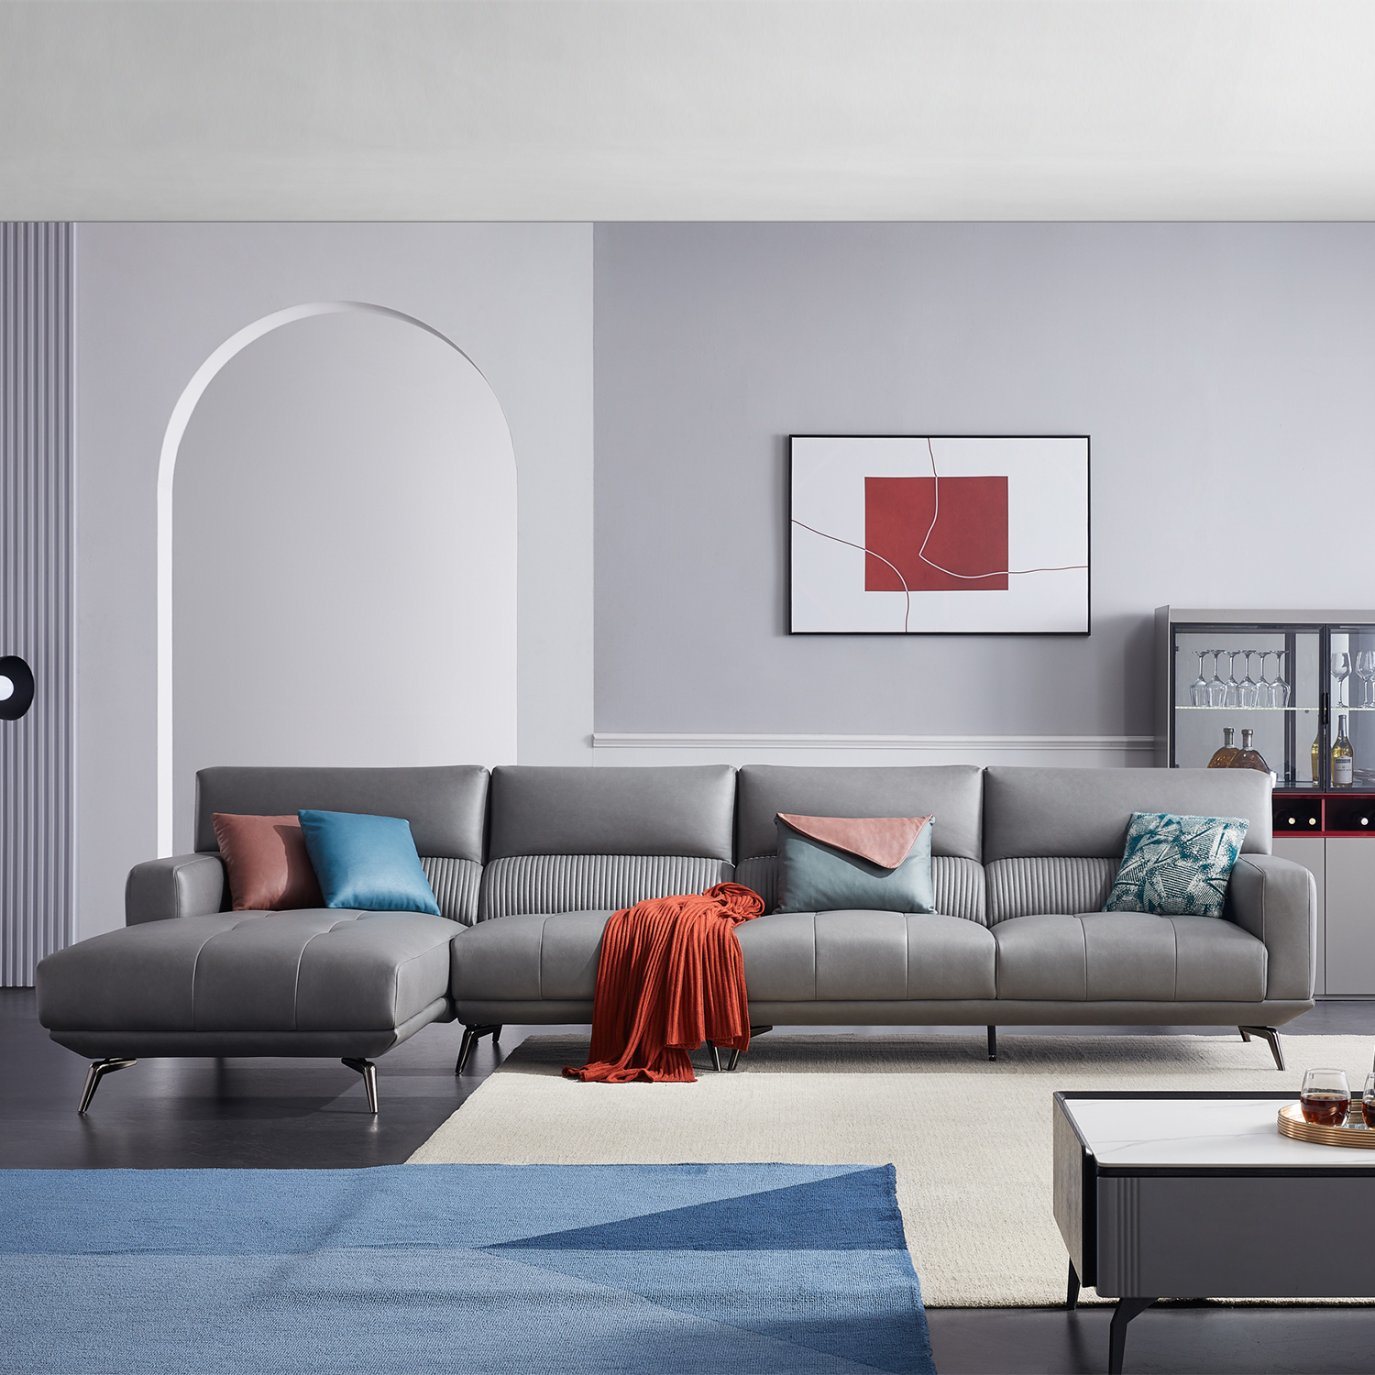 Customized Leather Sofa Living Room Corner Sectional Sofa